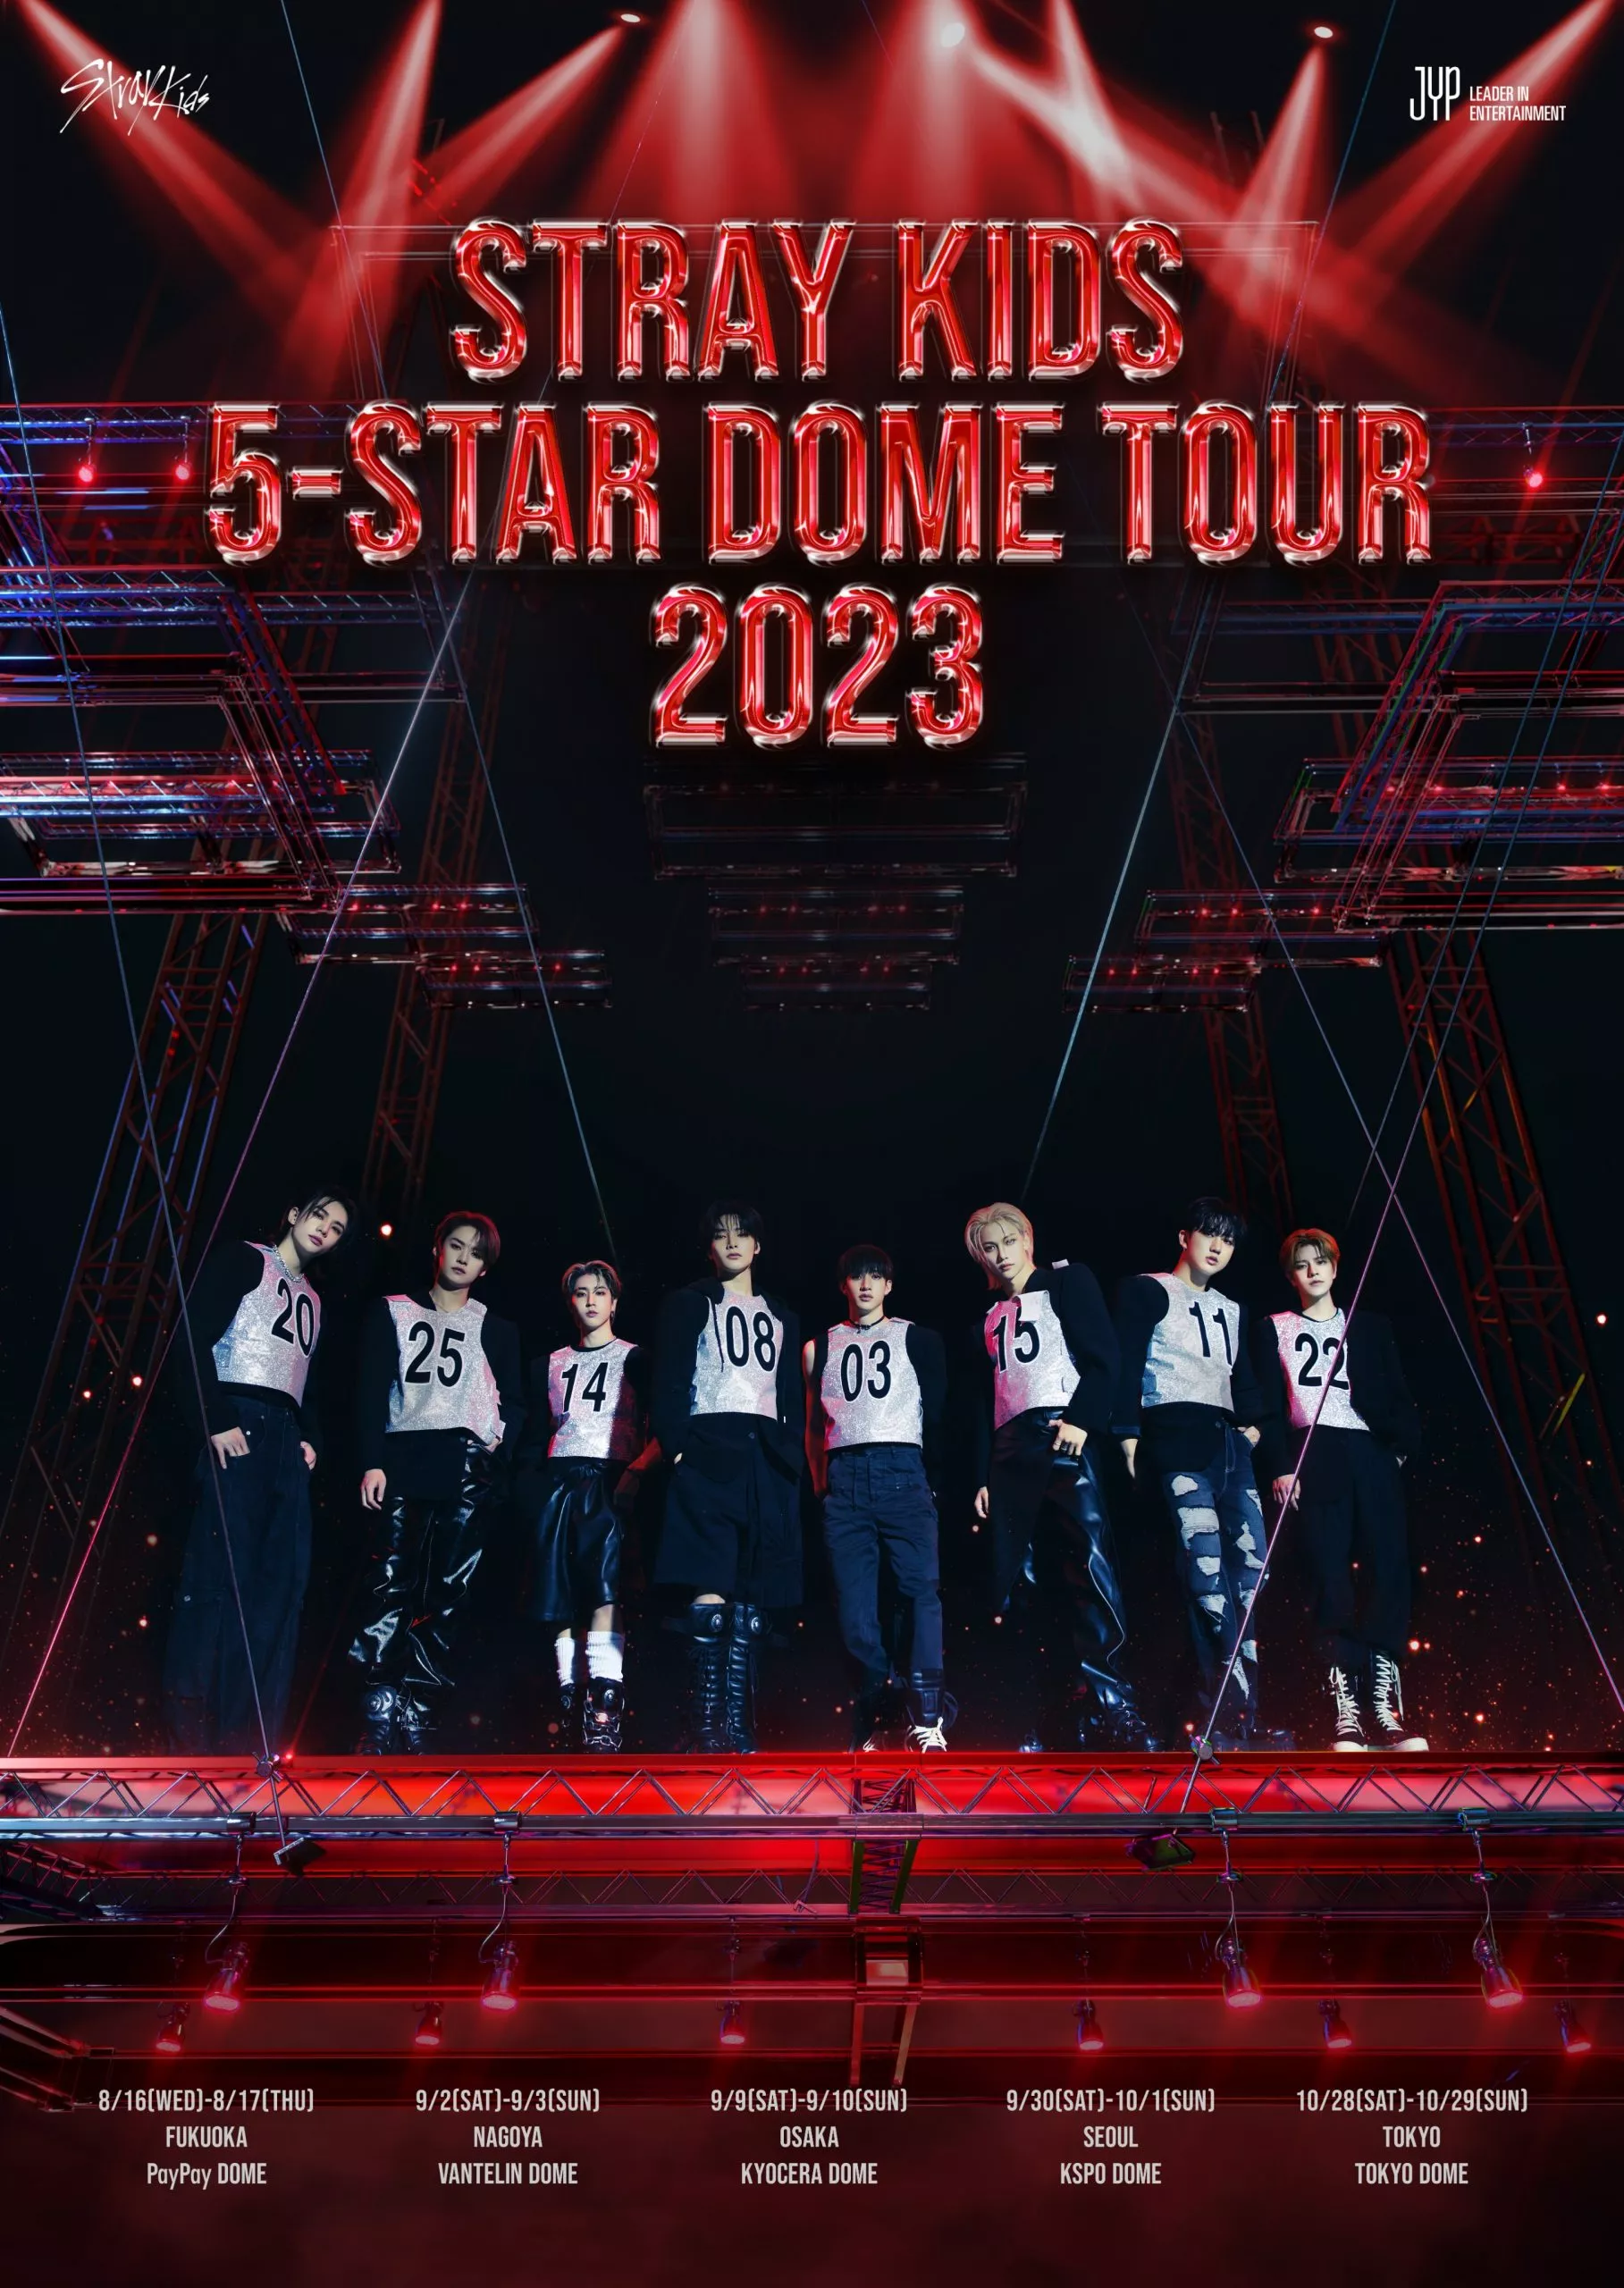 Stray Kids анонсируют "5-STAR Dome Tour 2023" и новый лайтстик